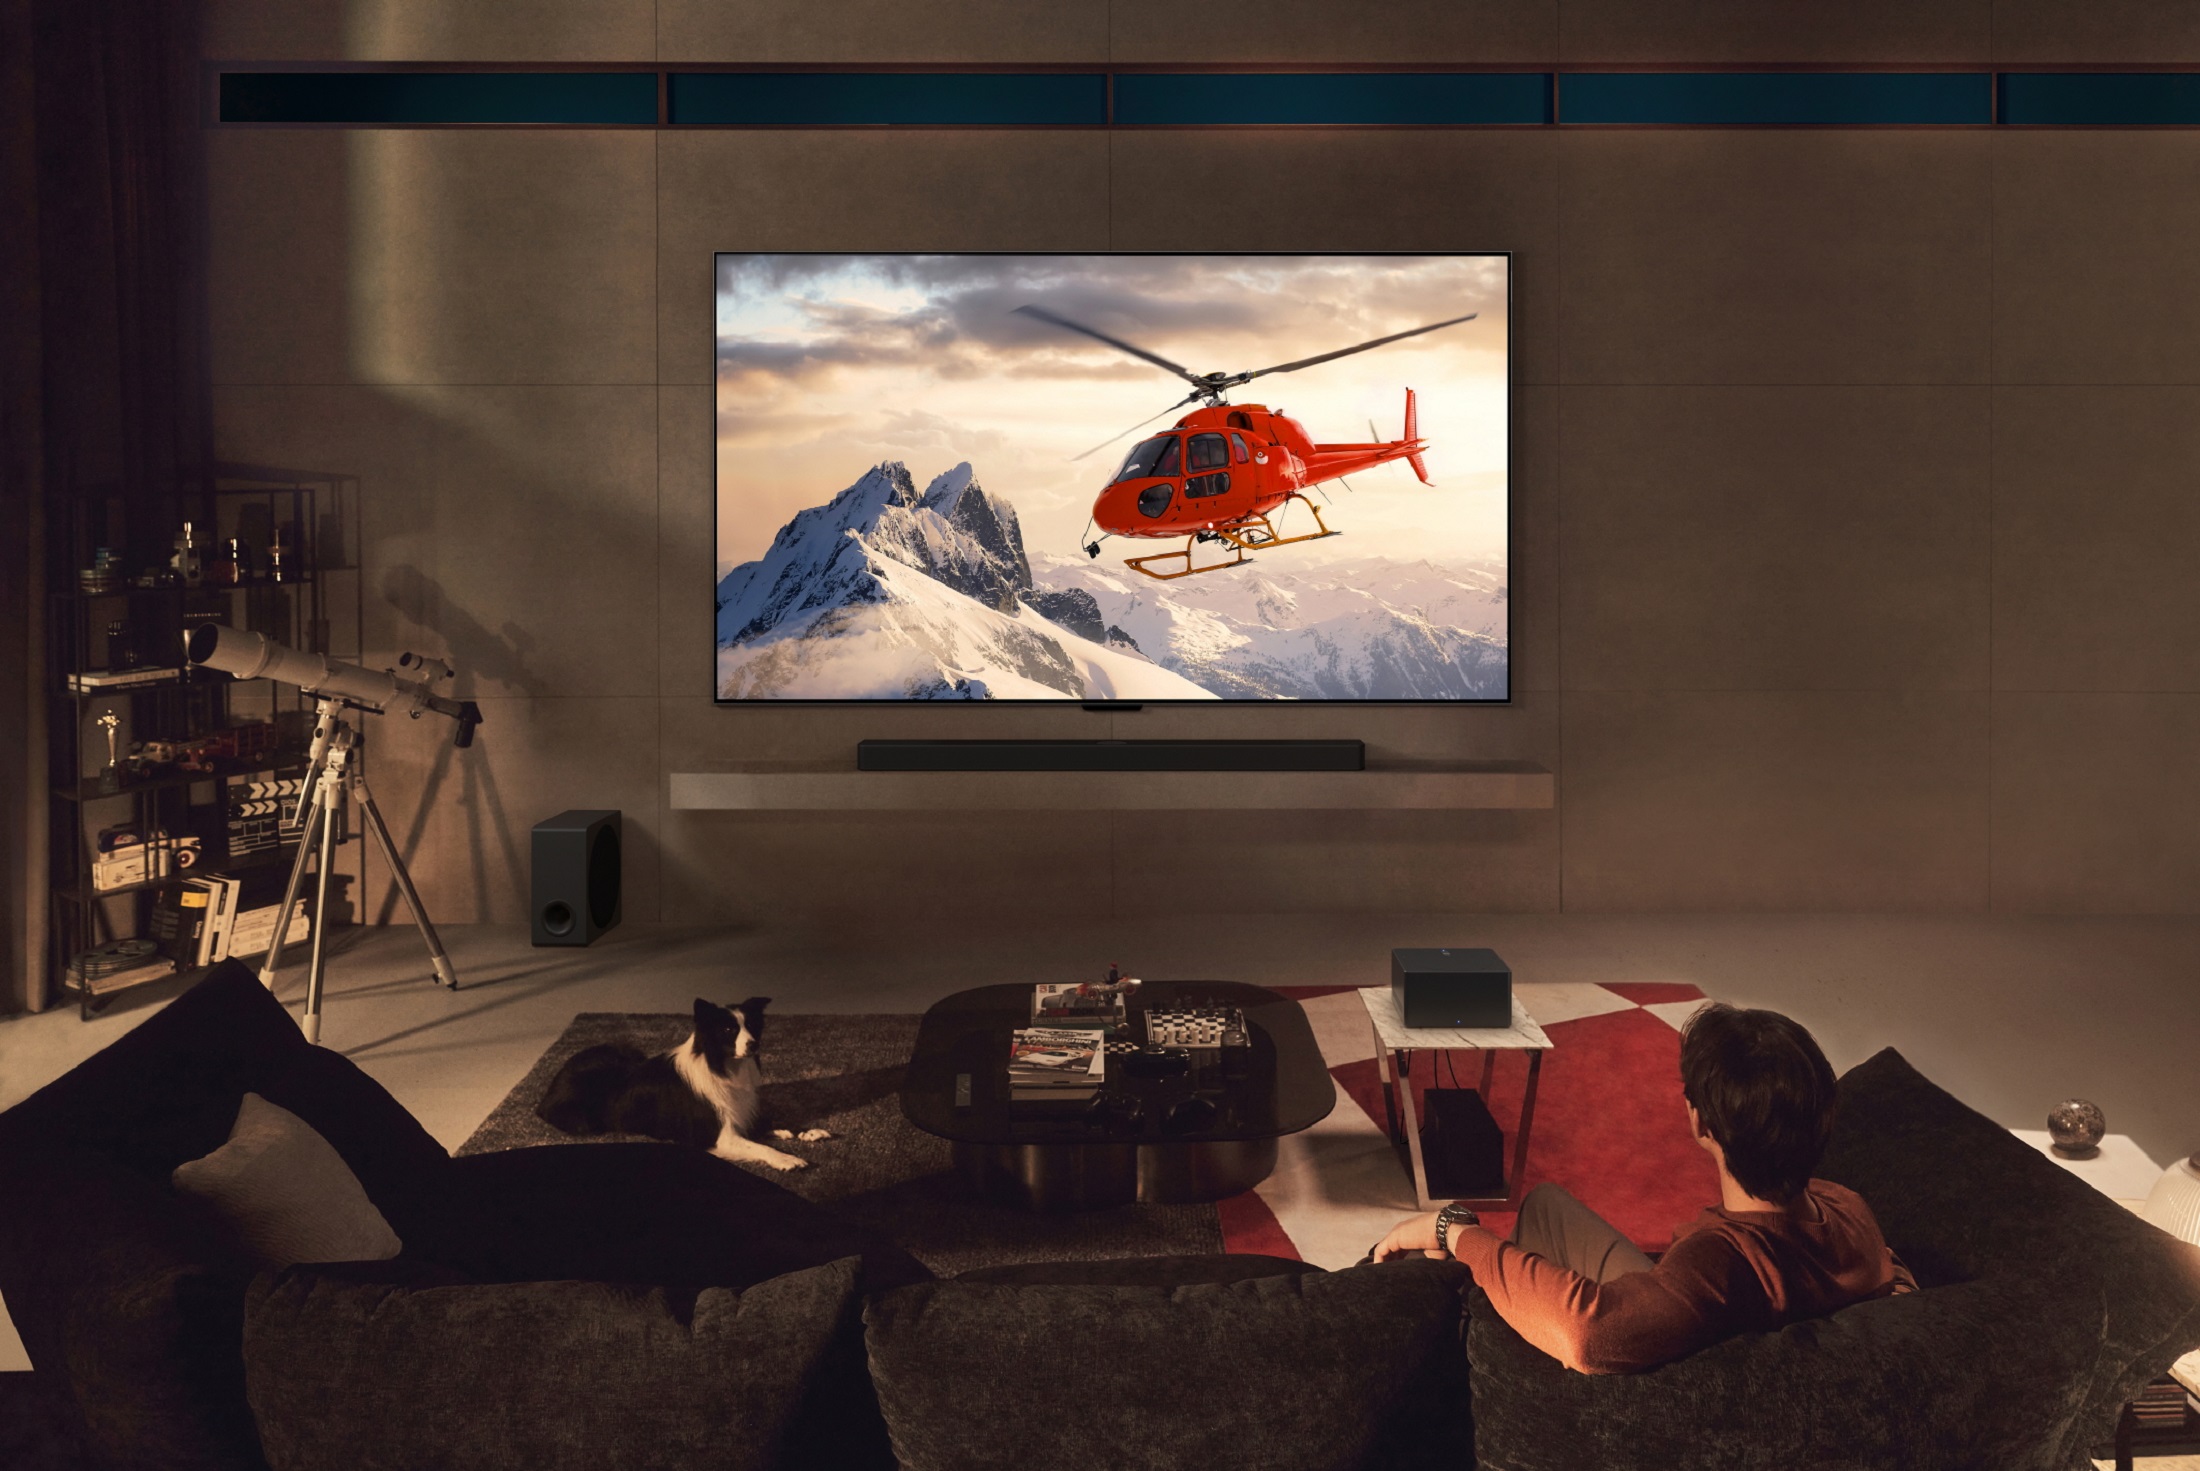 LG OLED M4 wireless TV.